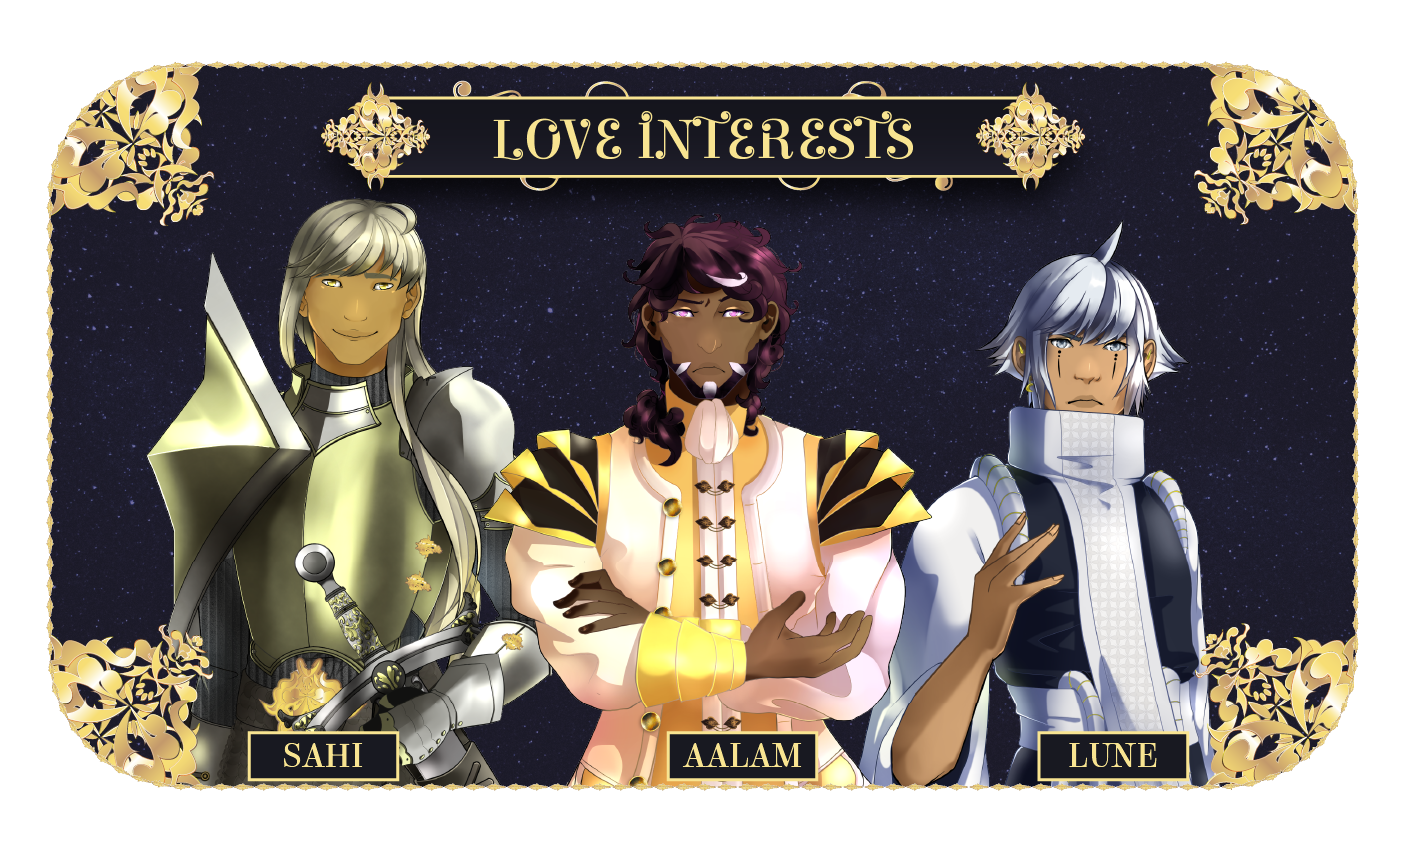 Love interests